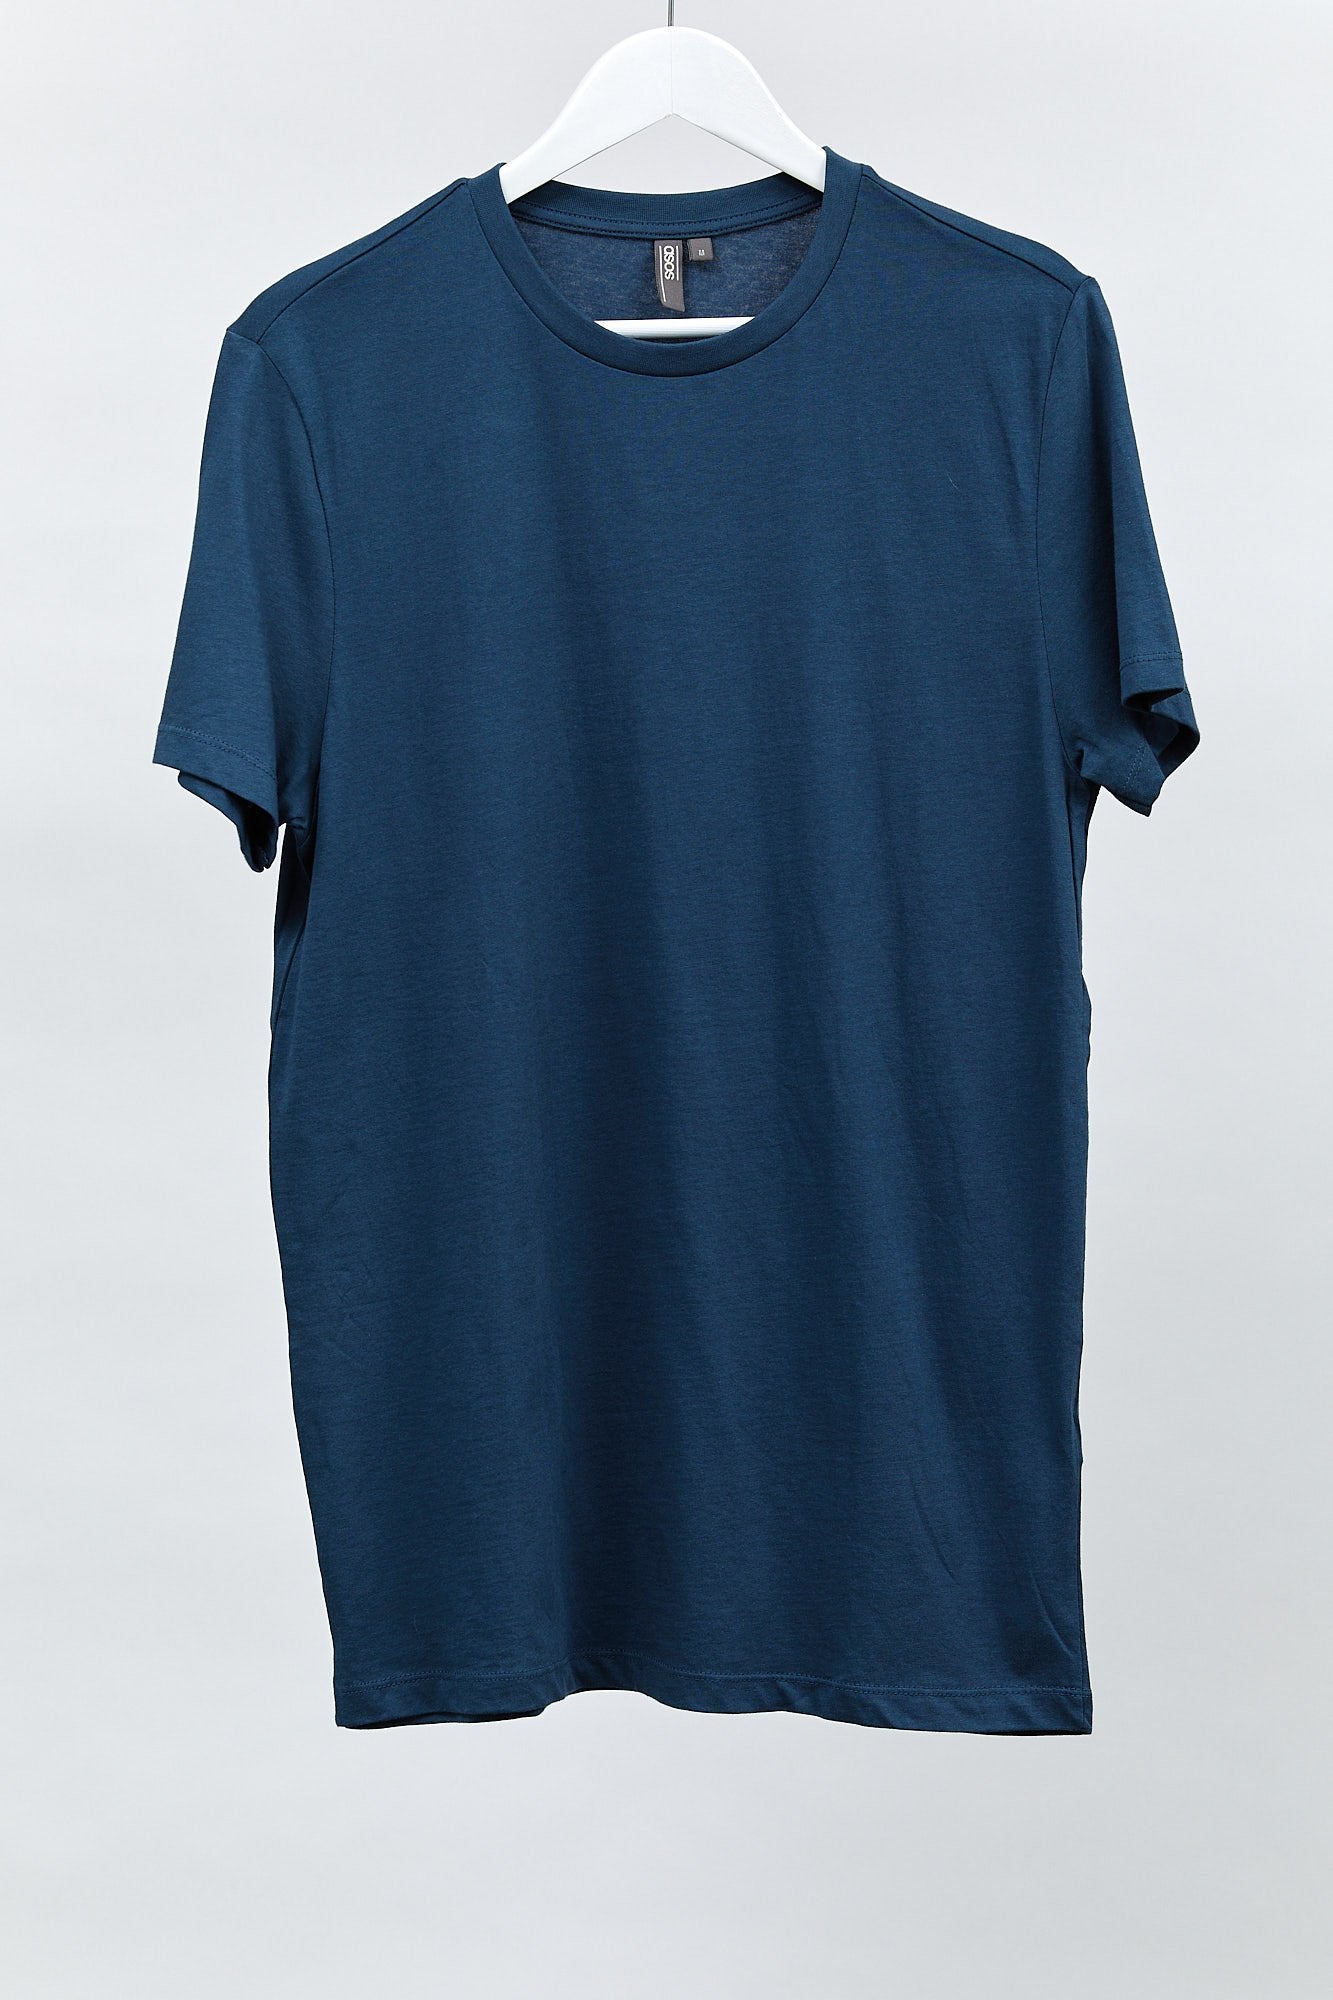 Mens Blue ASOS T-Shirt: Size Medium